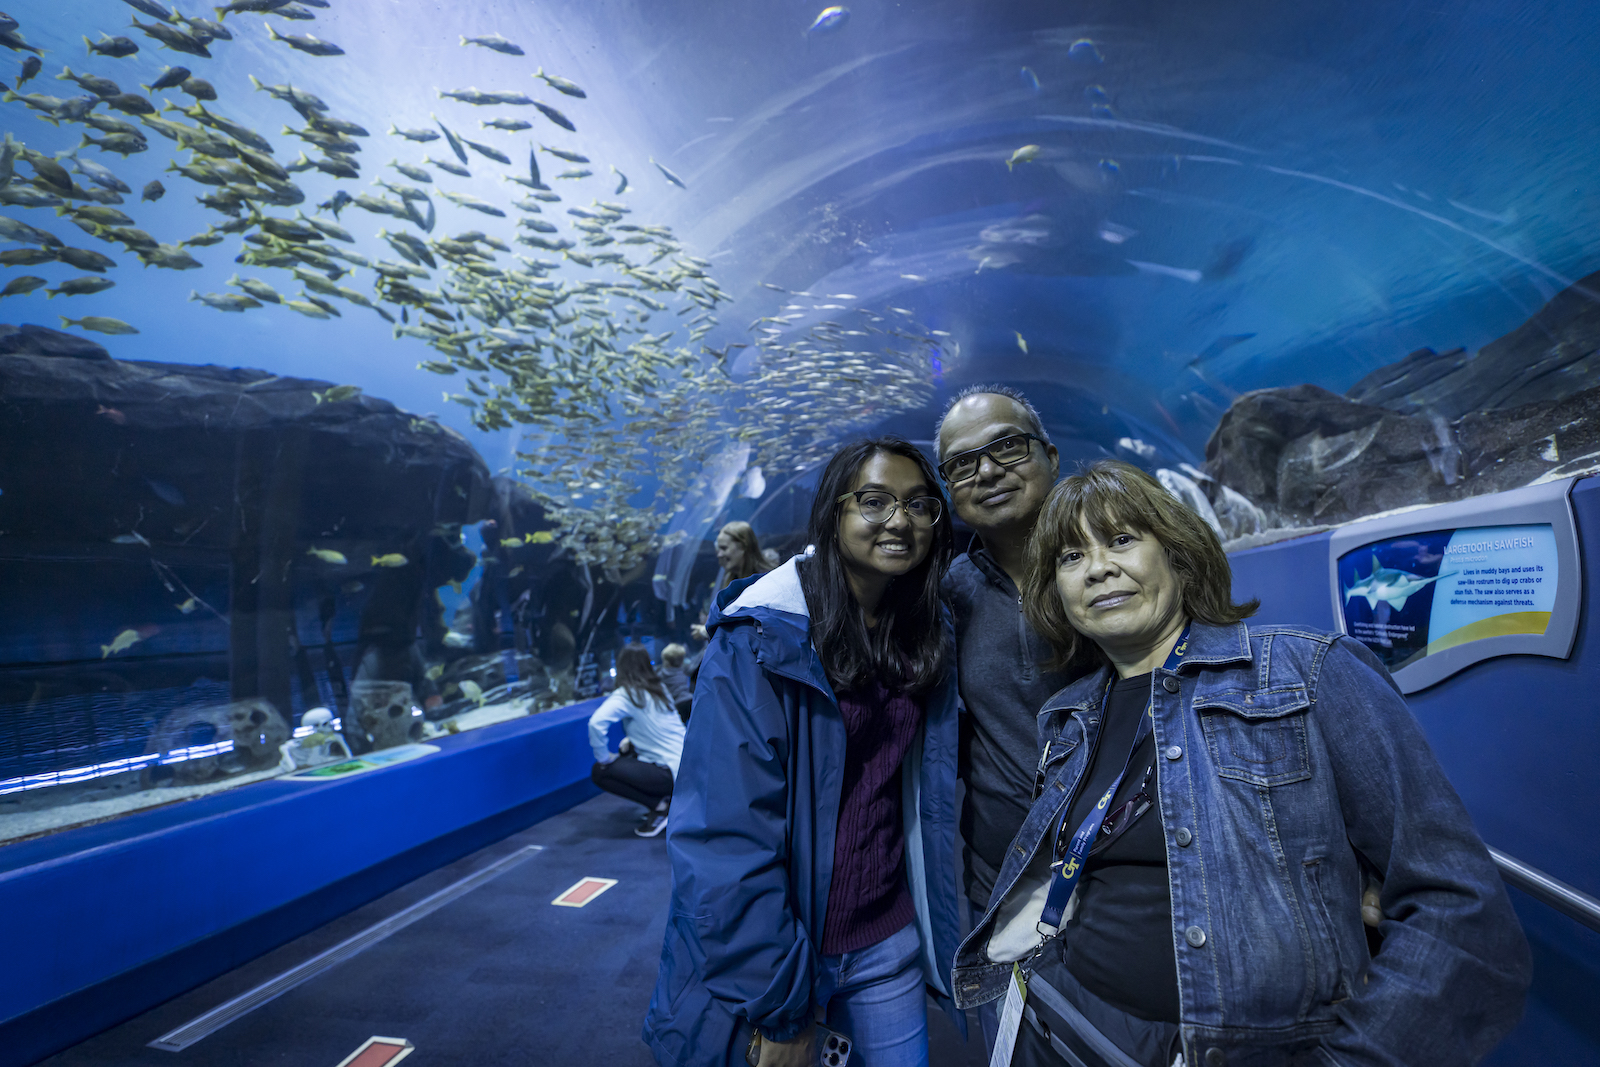 Family Weekend at the Georgia Aquarium